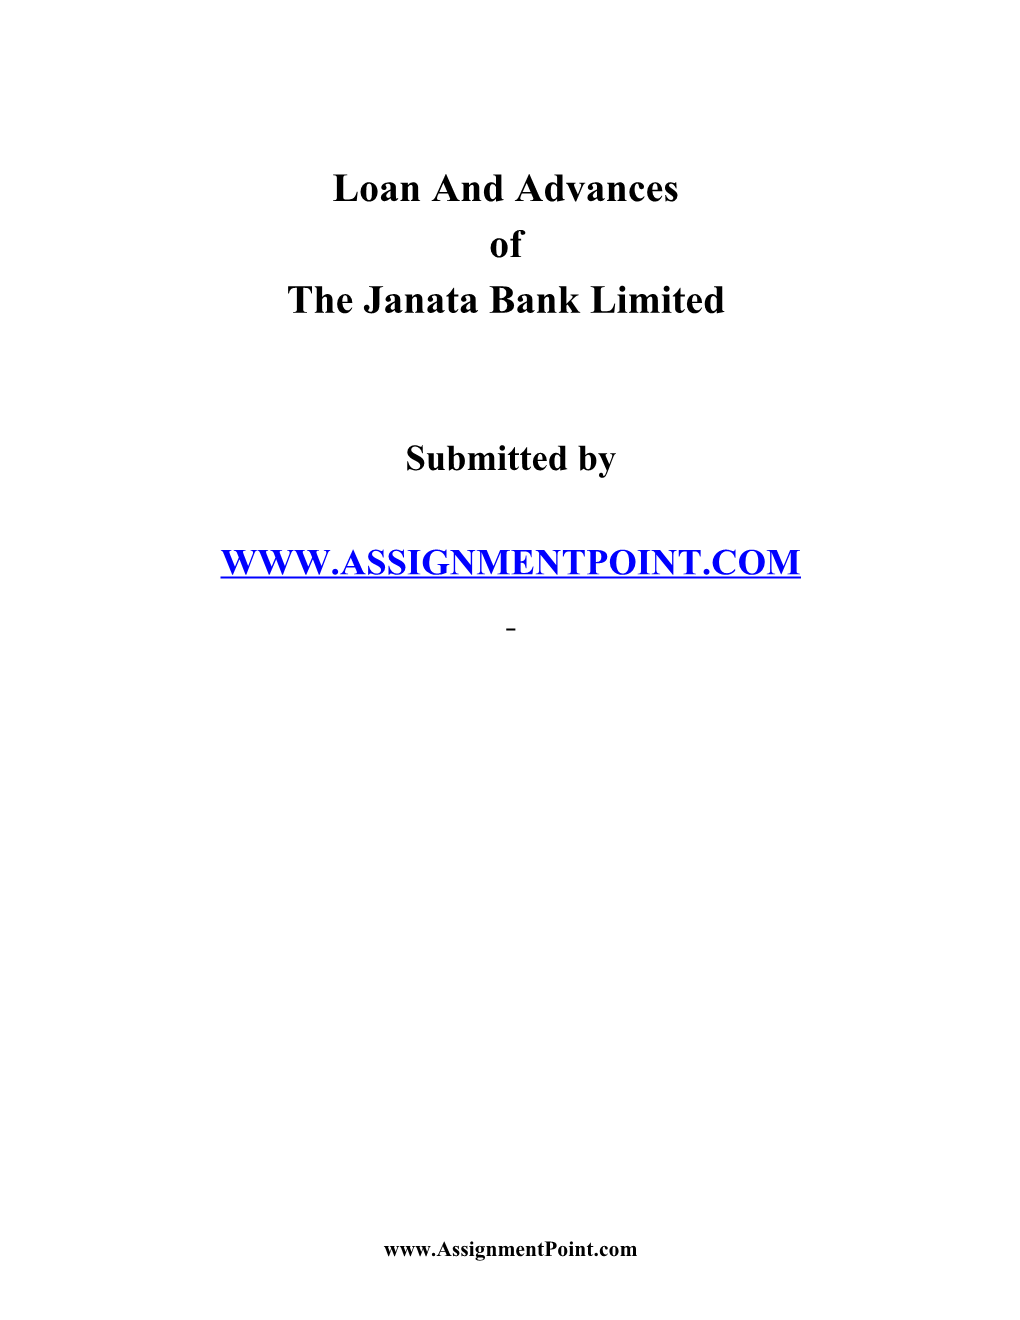 Loan and Advances